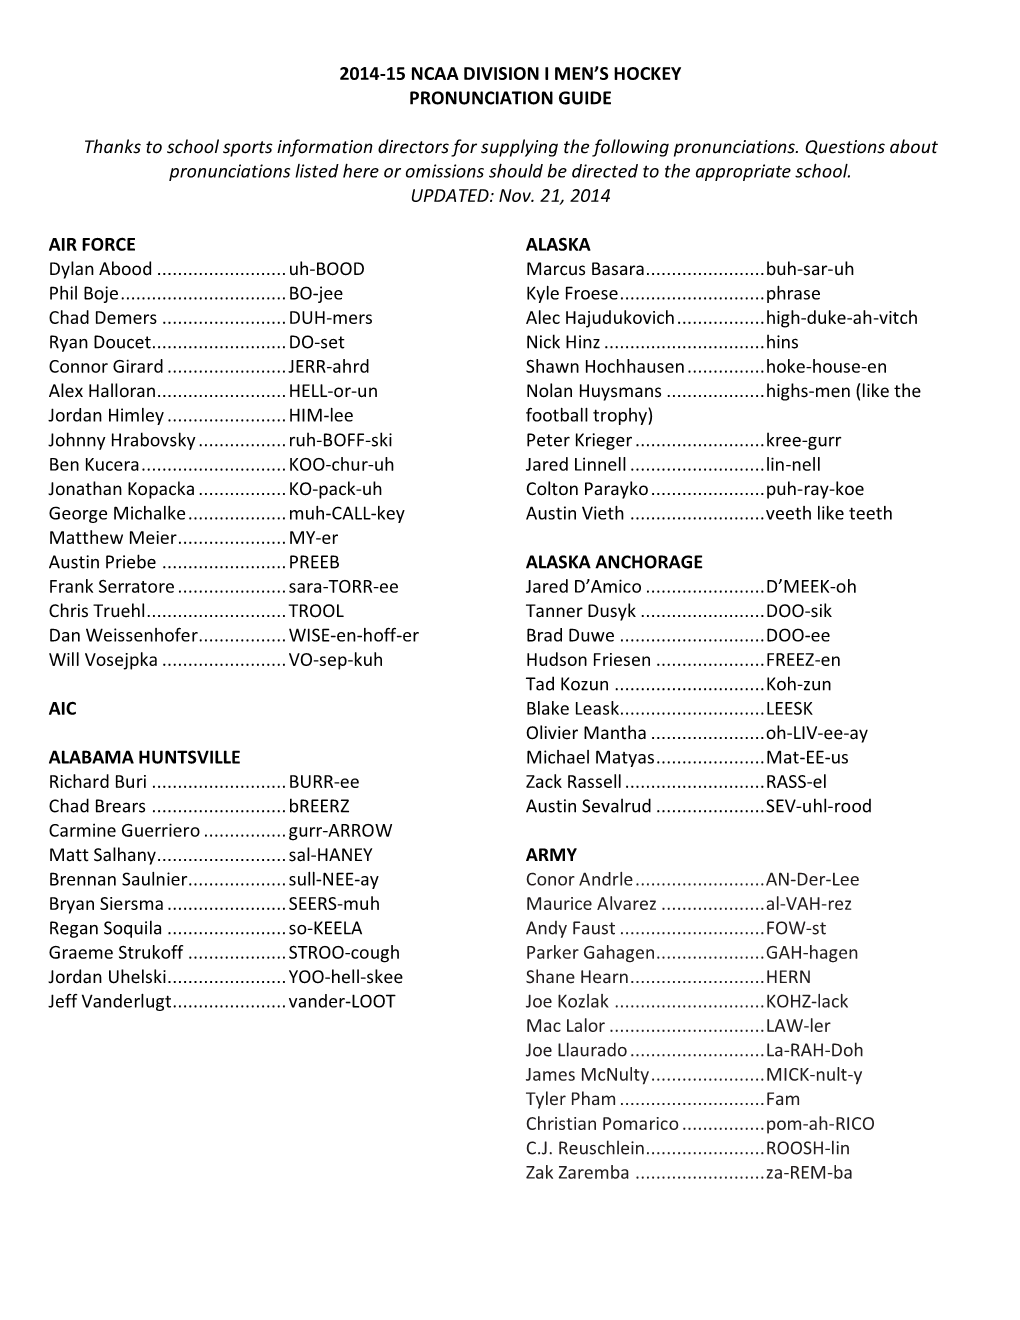 2014-15 Ncaa Division I Men's Hockey Pronunciation